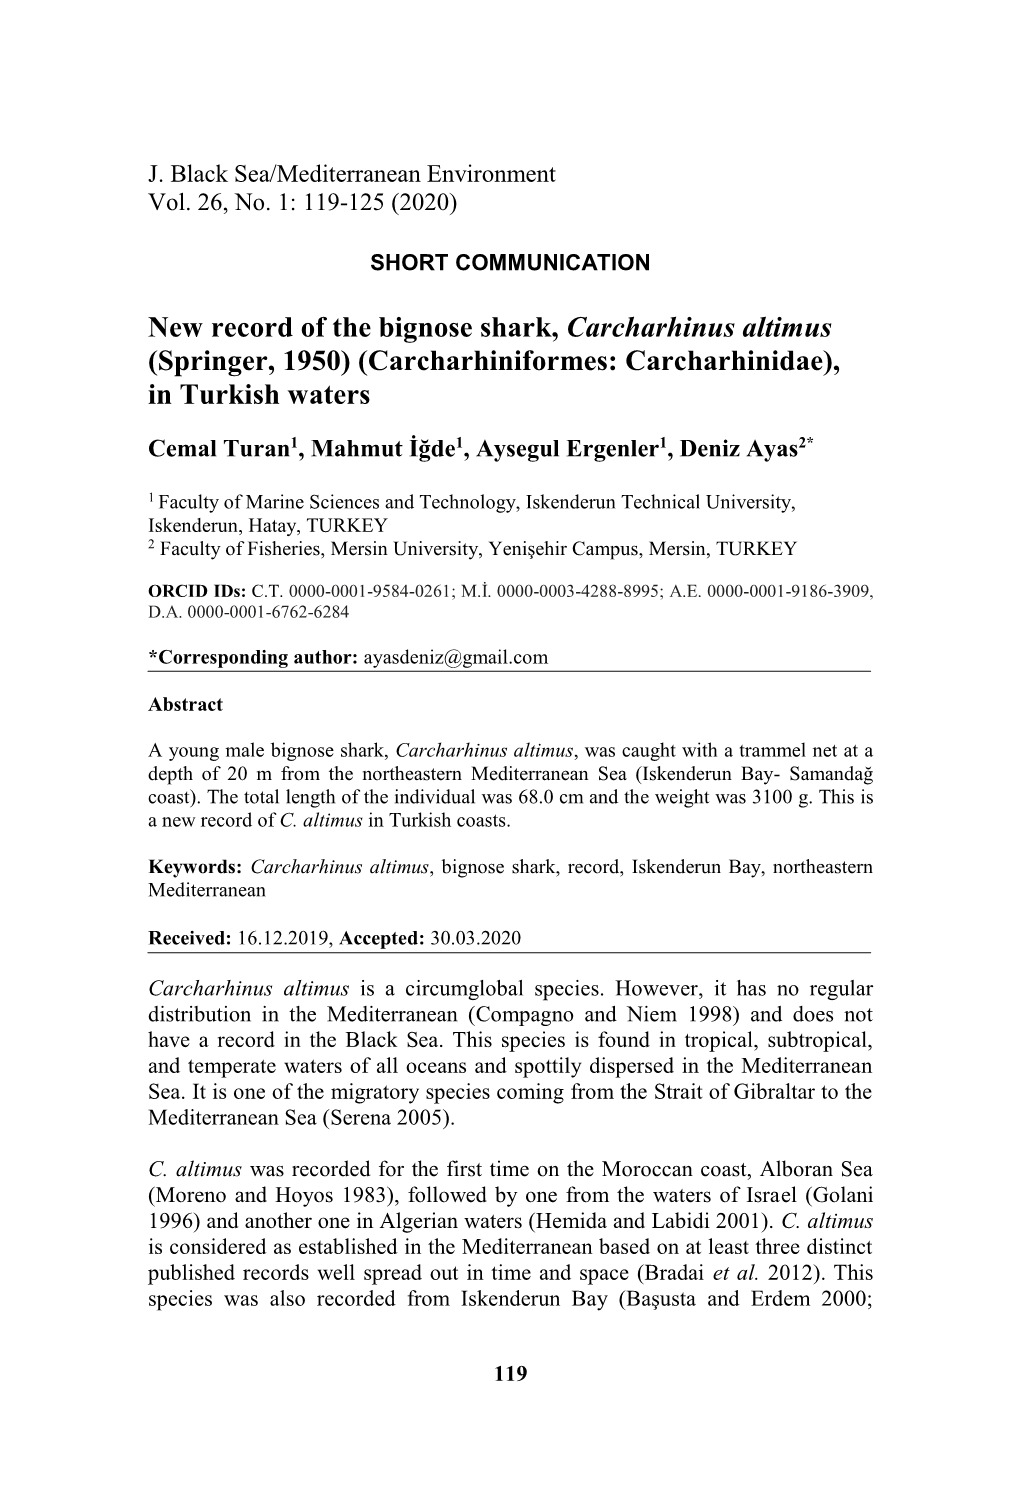 New Record of the Bignose Shark, Carcharhinus Altimus (Springer, 1950) (Carcharhiniformes: Carcharhinidae), in Turkish Waters